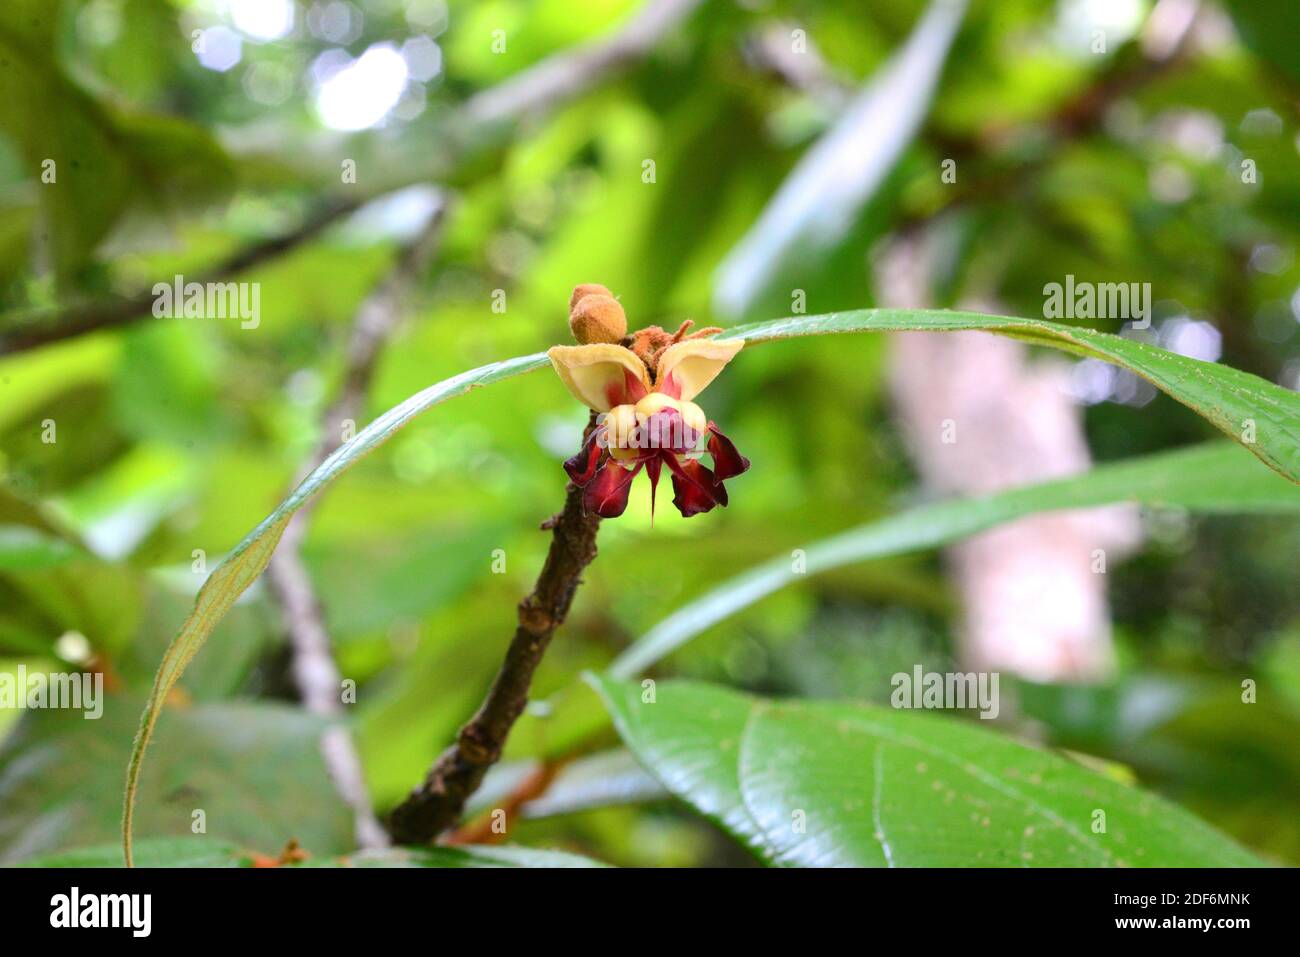 Flor de brasil fotografías e imágenes de alta resolución - Alamy